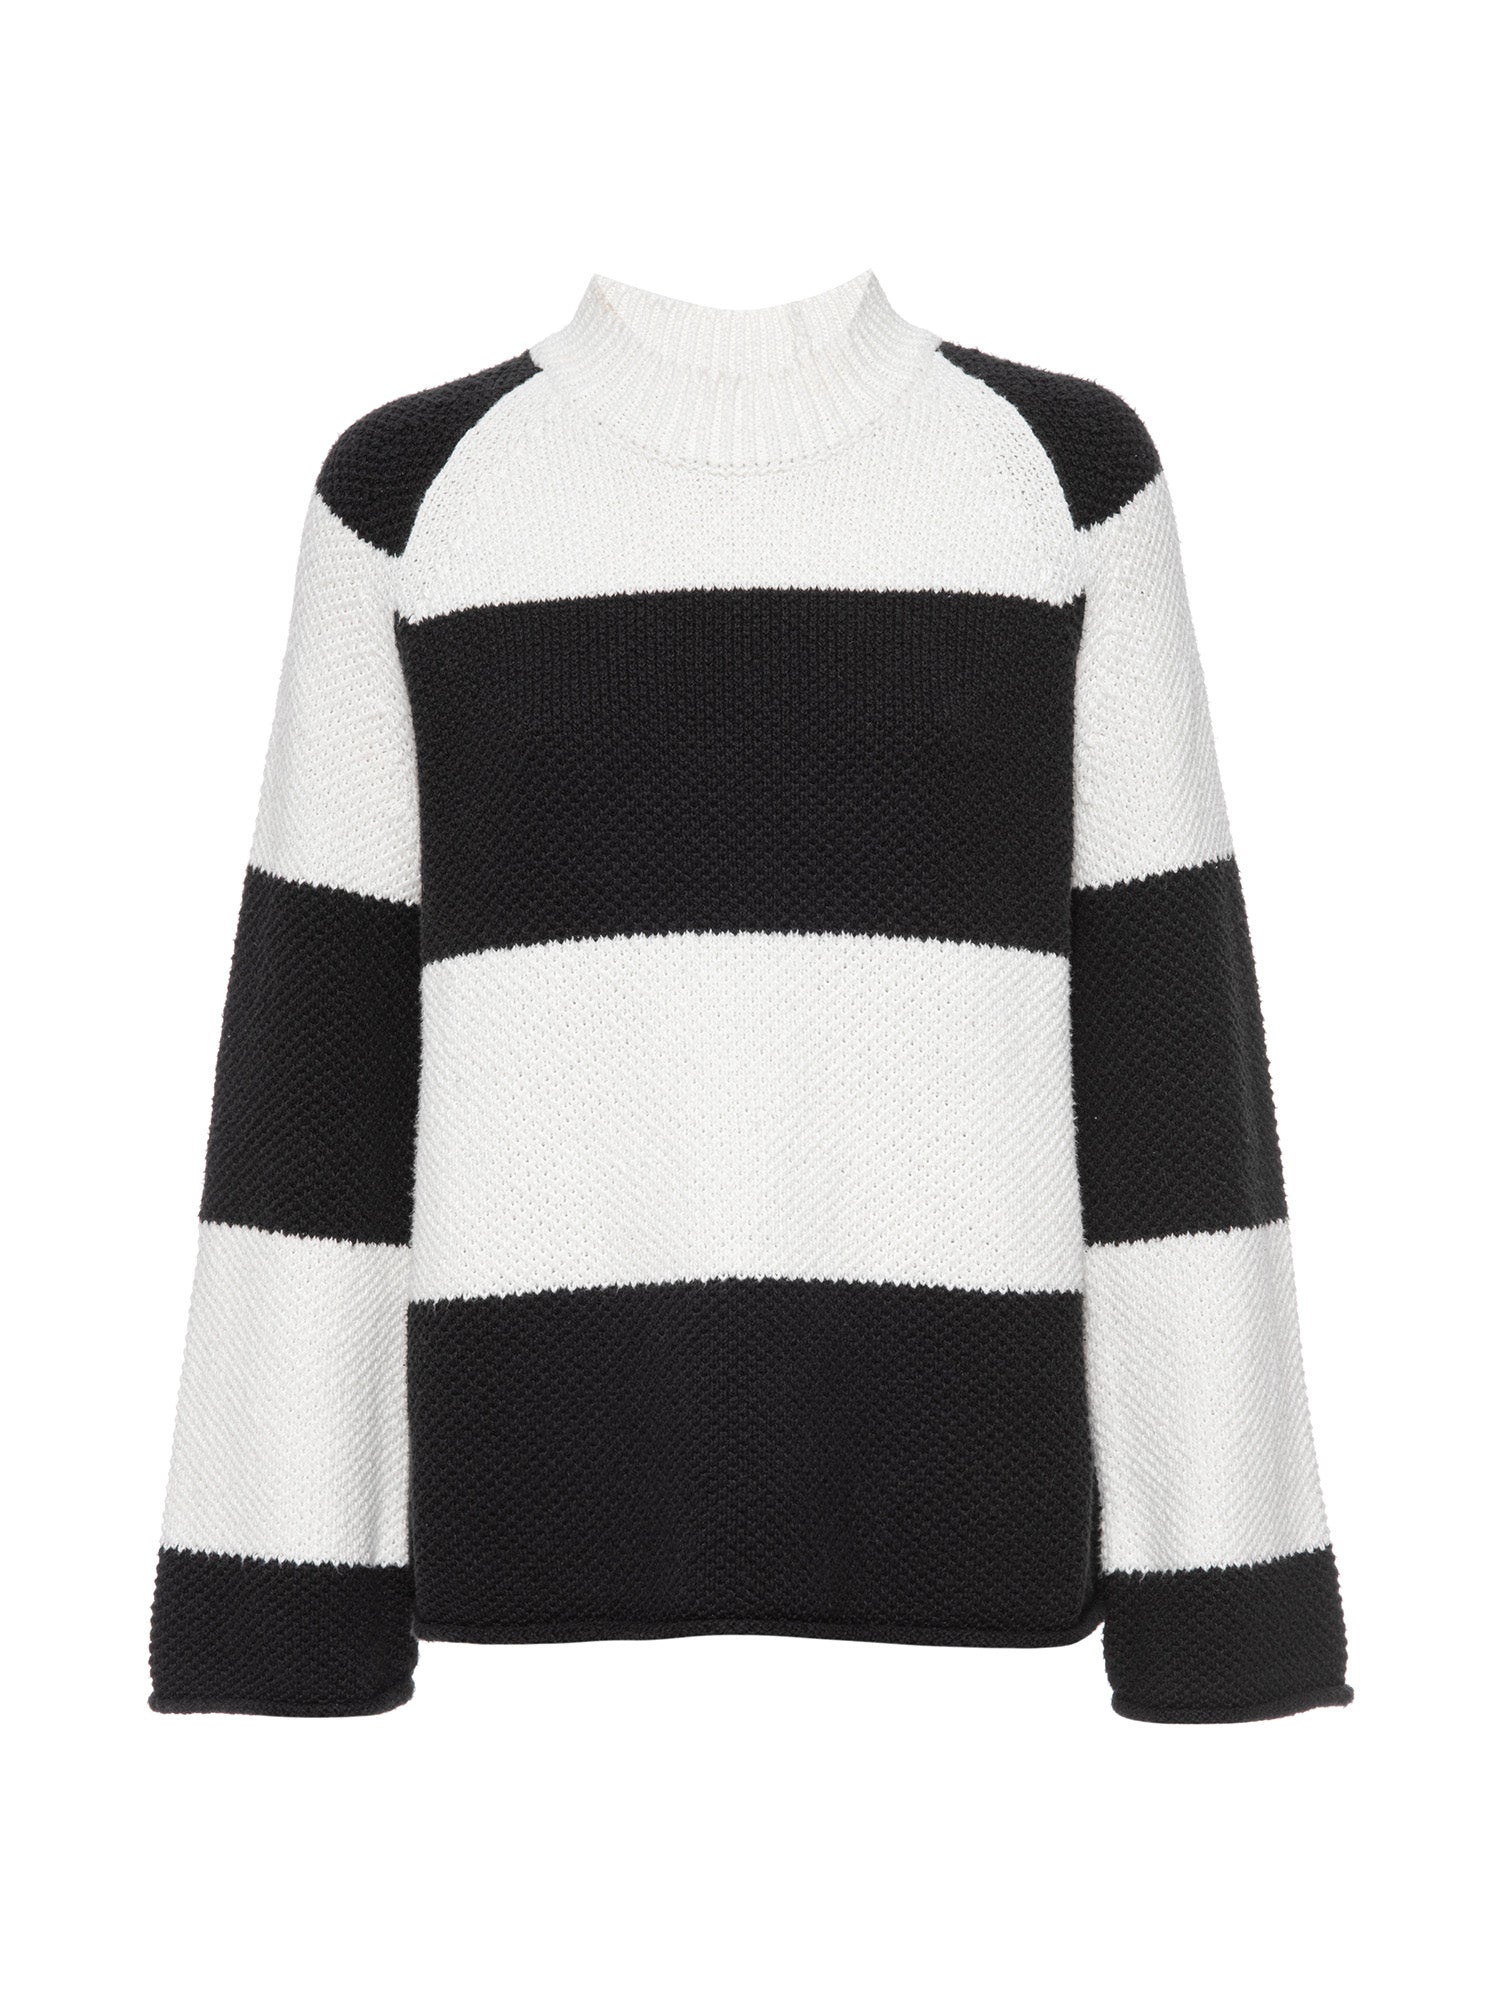 Marco white black stripe cotton crewneck sweater flat view